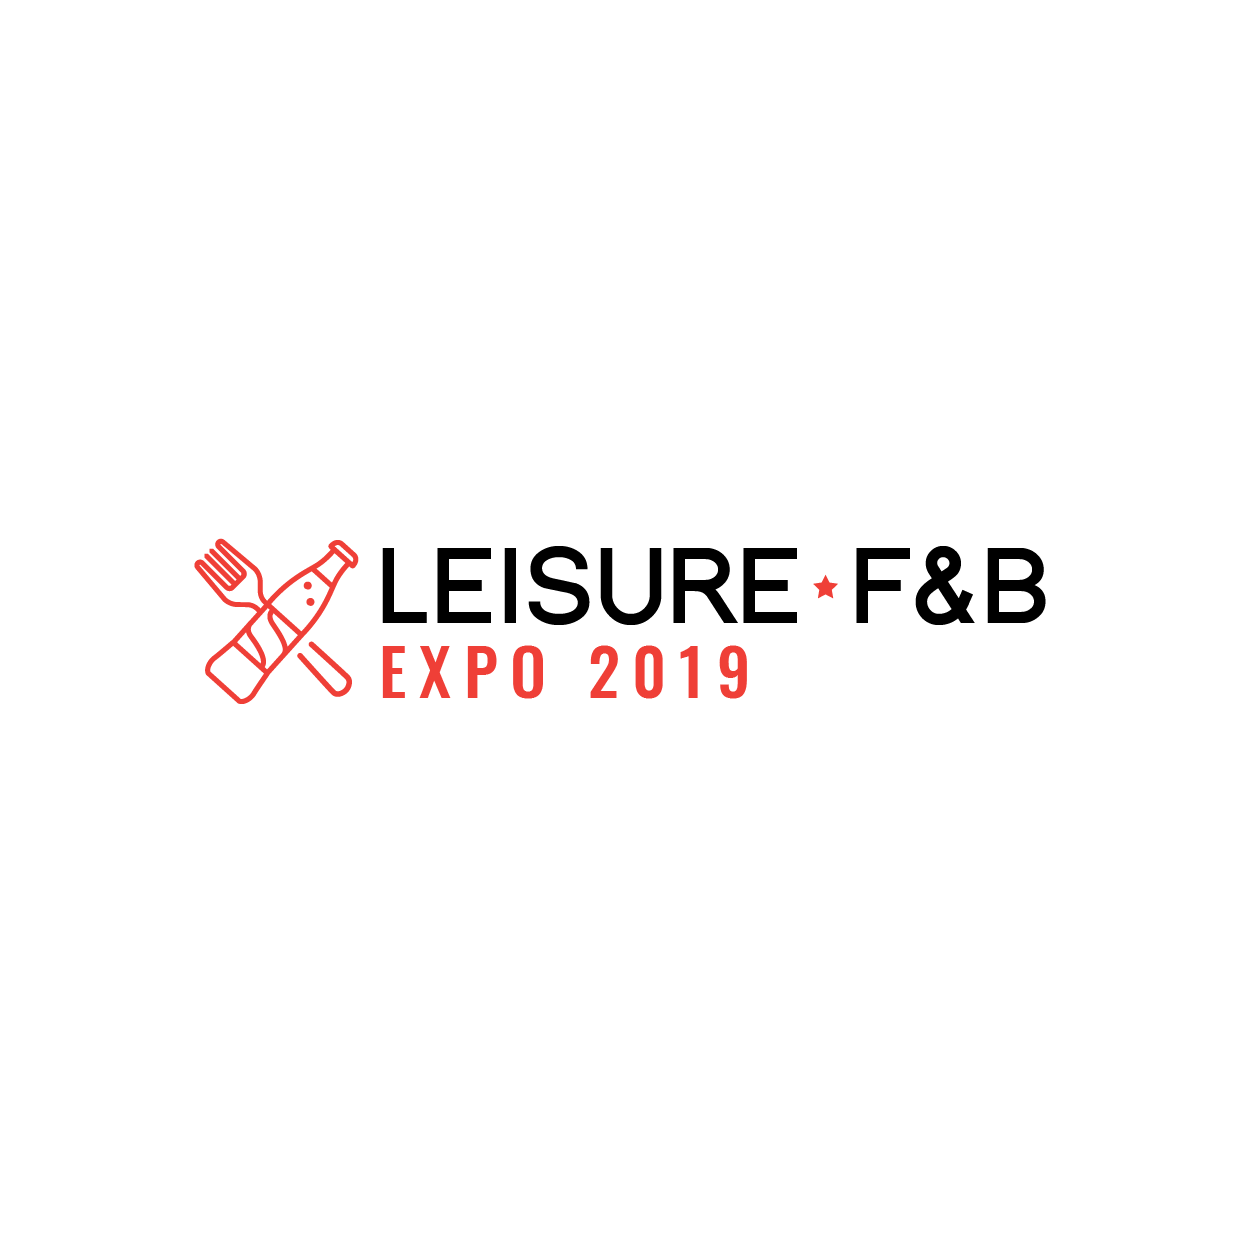 Leisure F&B Expo 2019